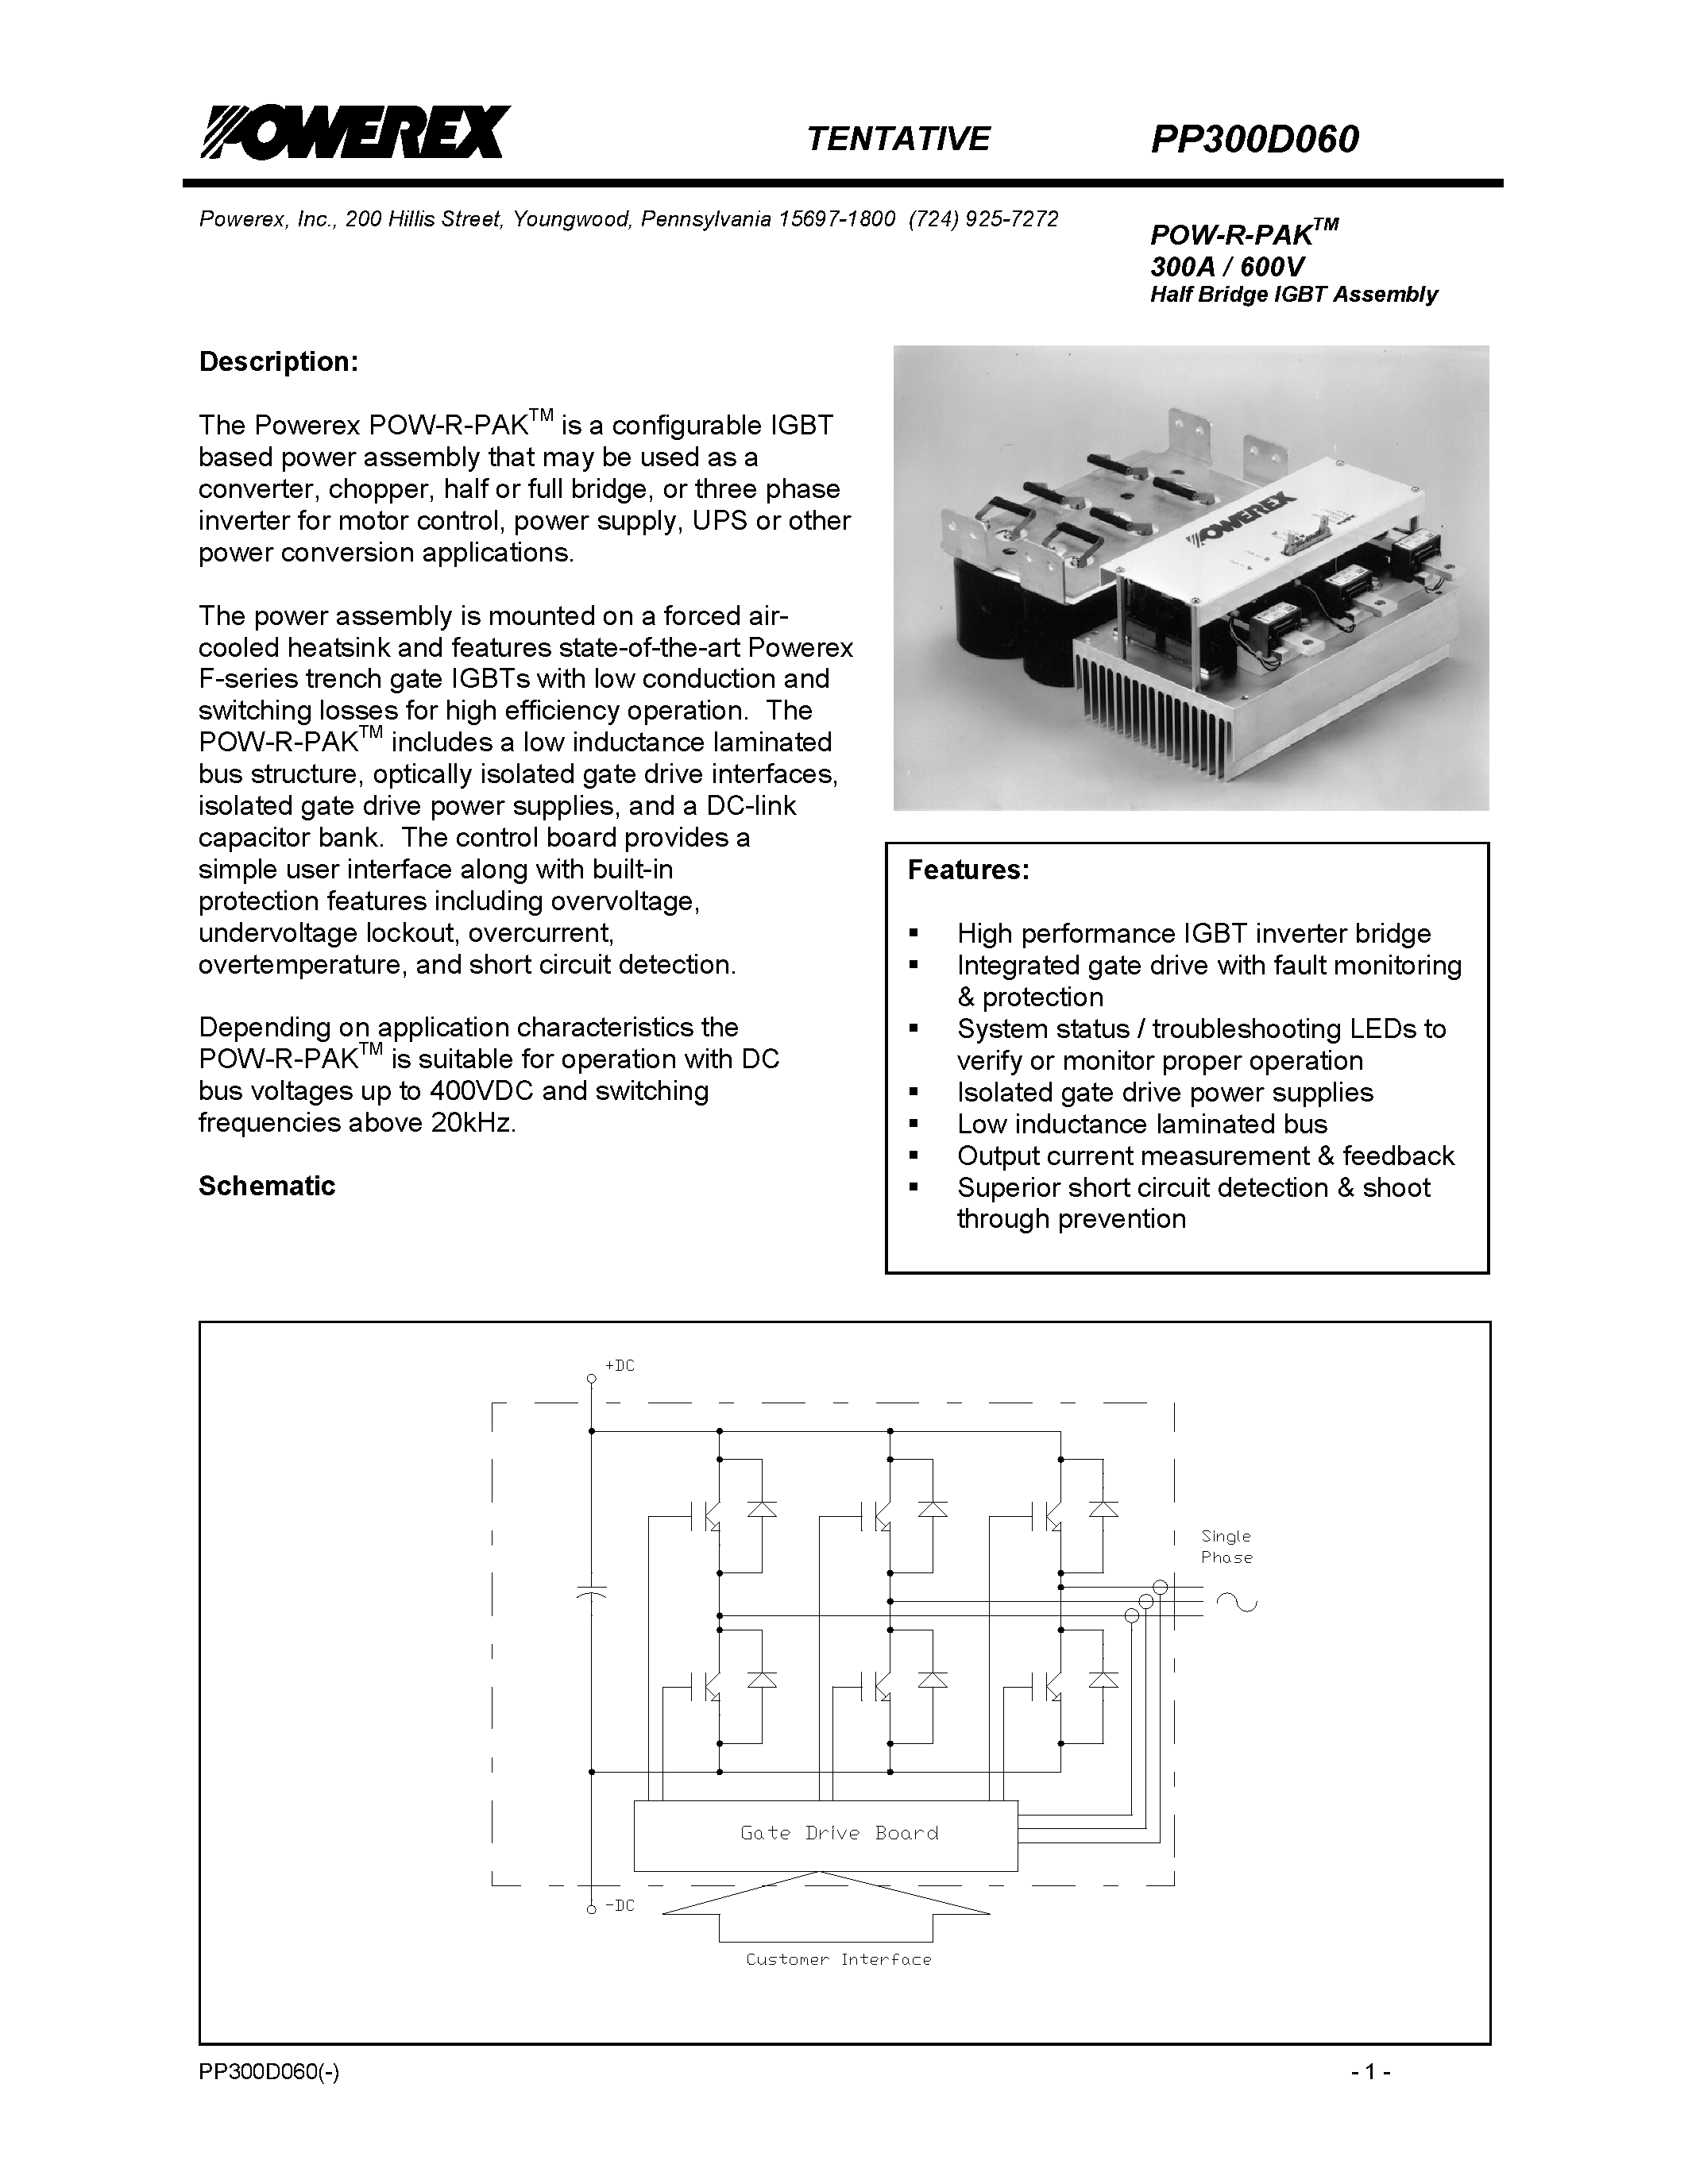 Datasheet PP300D060 - POW-R-PAK 300A / 600V Half Bridge IGBT Assembly page 1